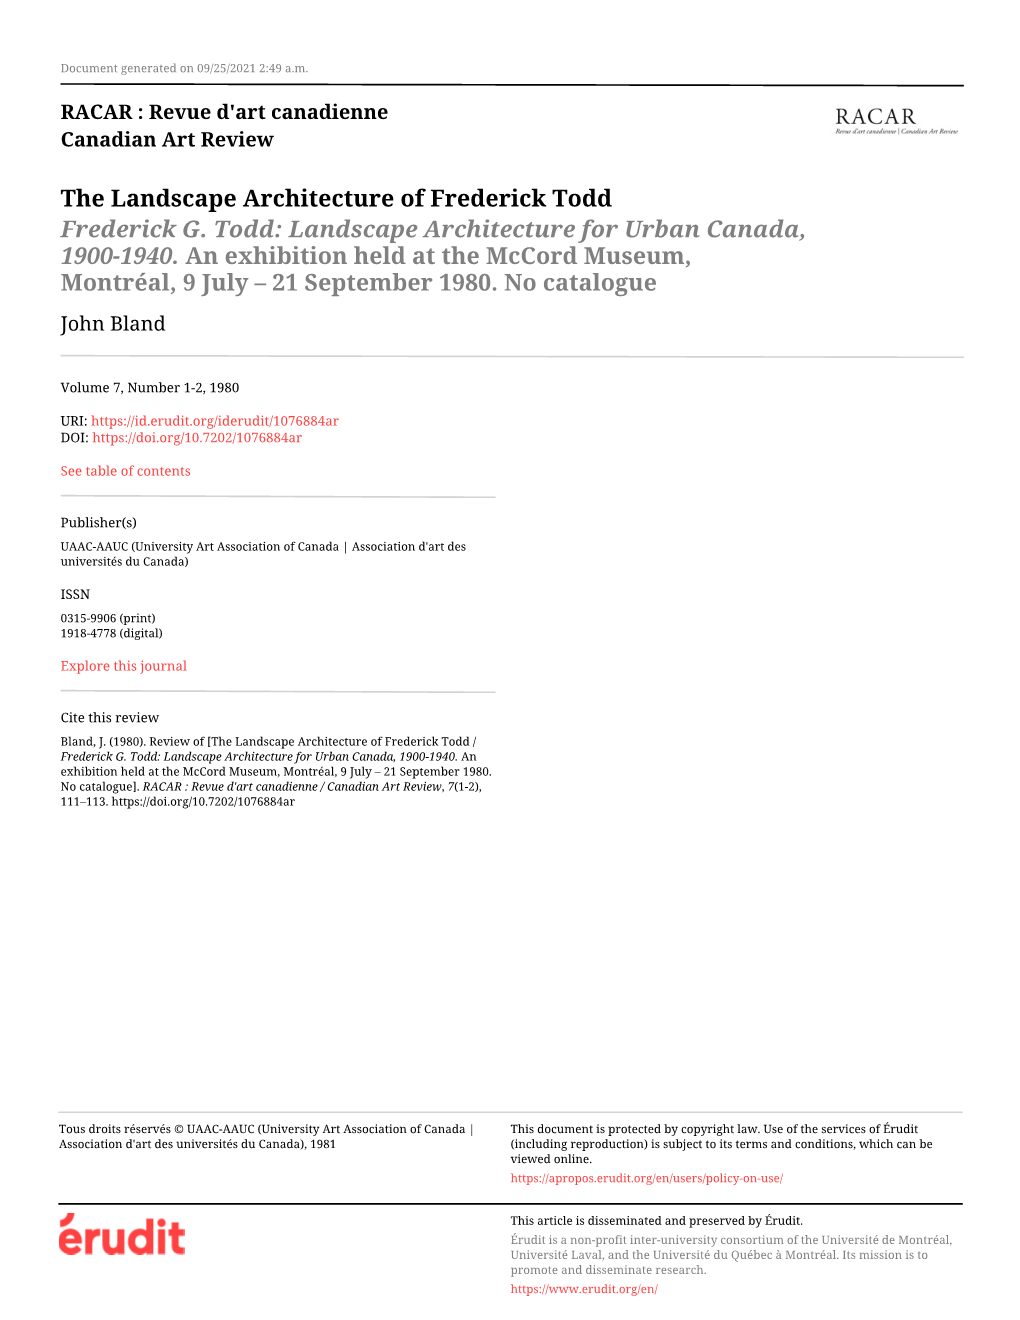 The Landscape Architecture of Frederick Todd / Frederick G